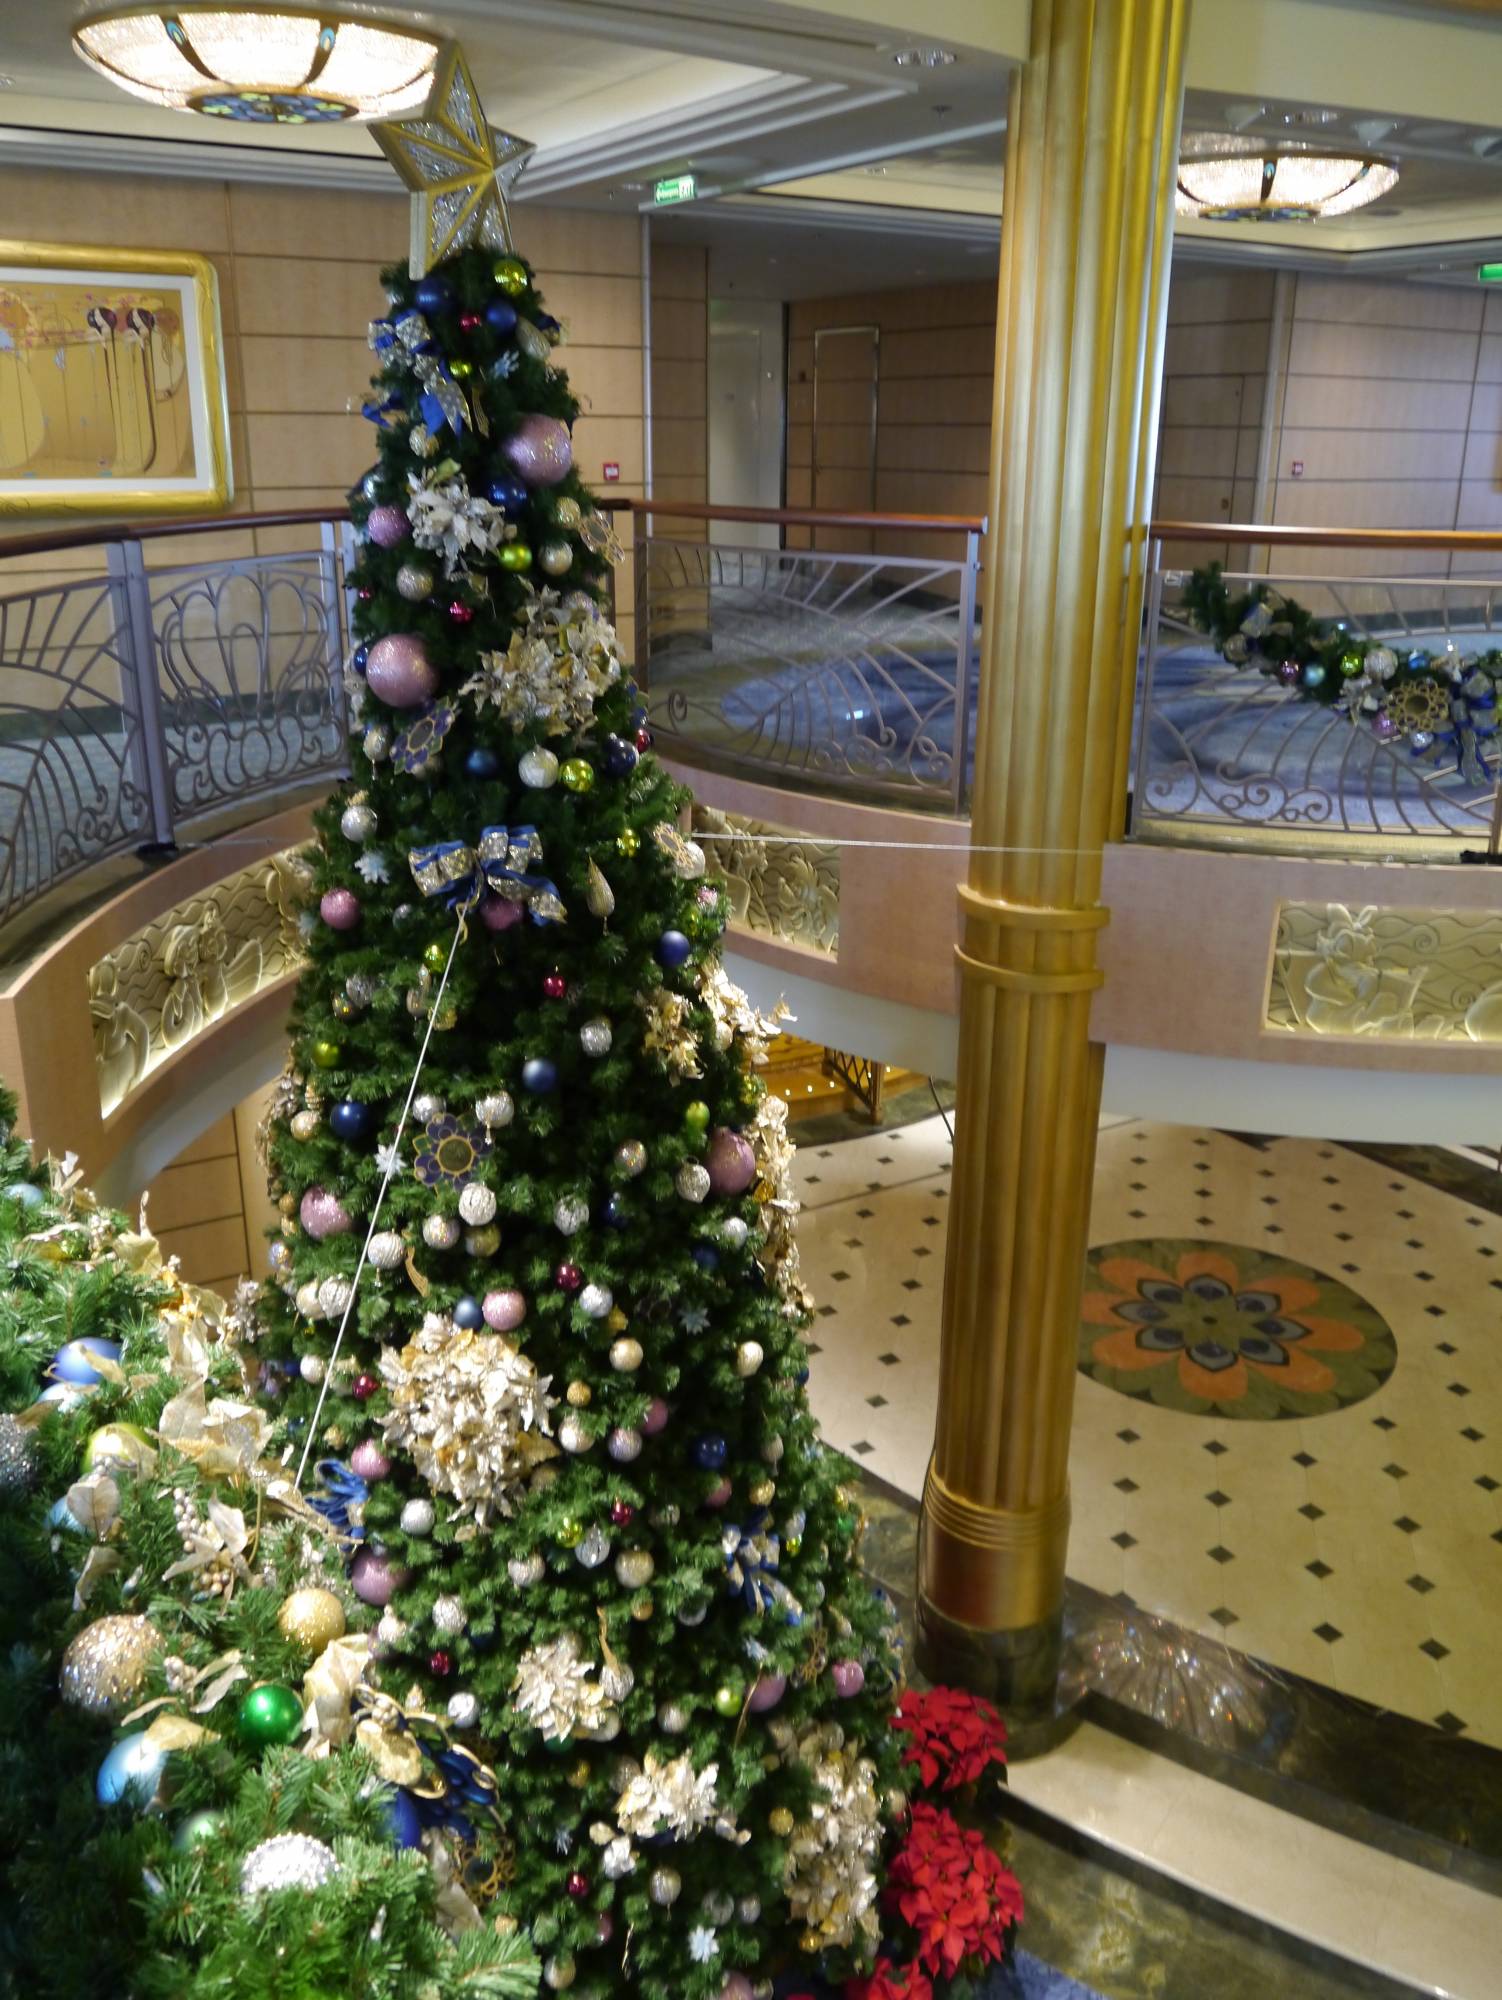 Disney Fantasy - Christmas tree